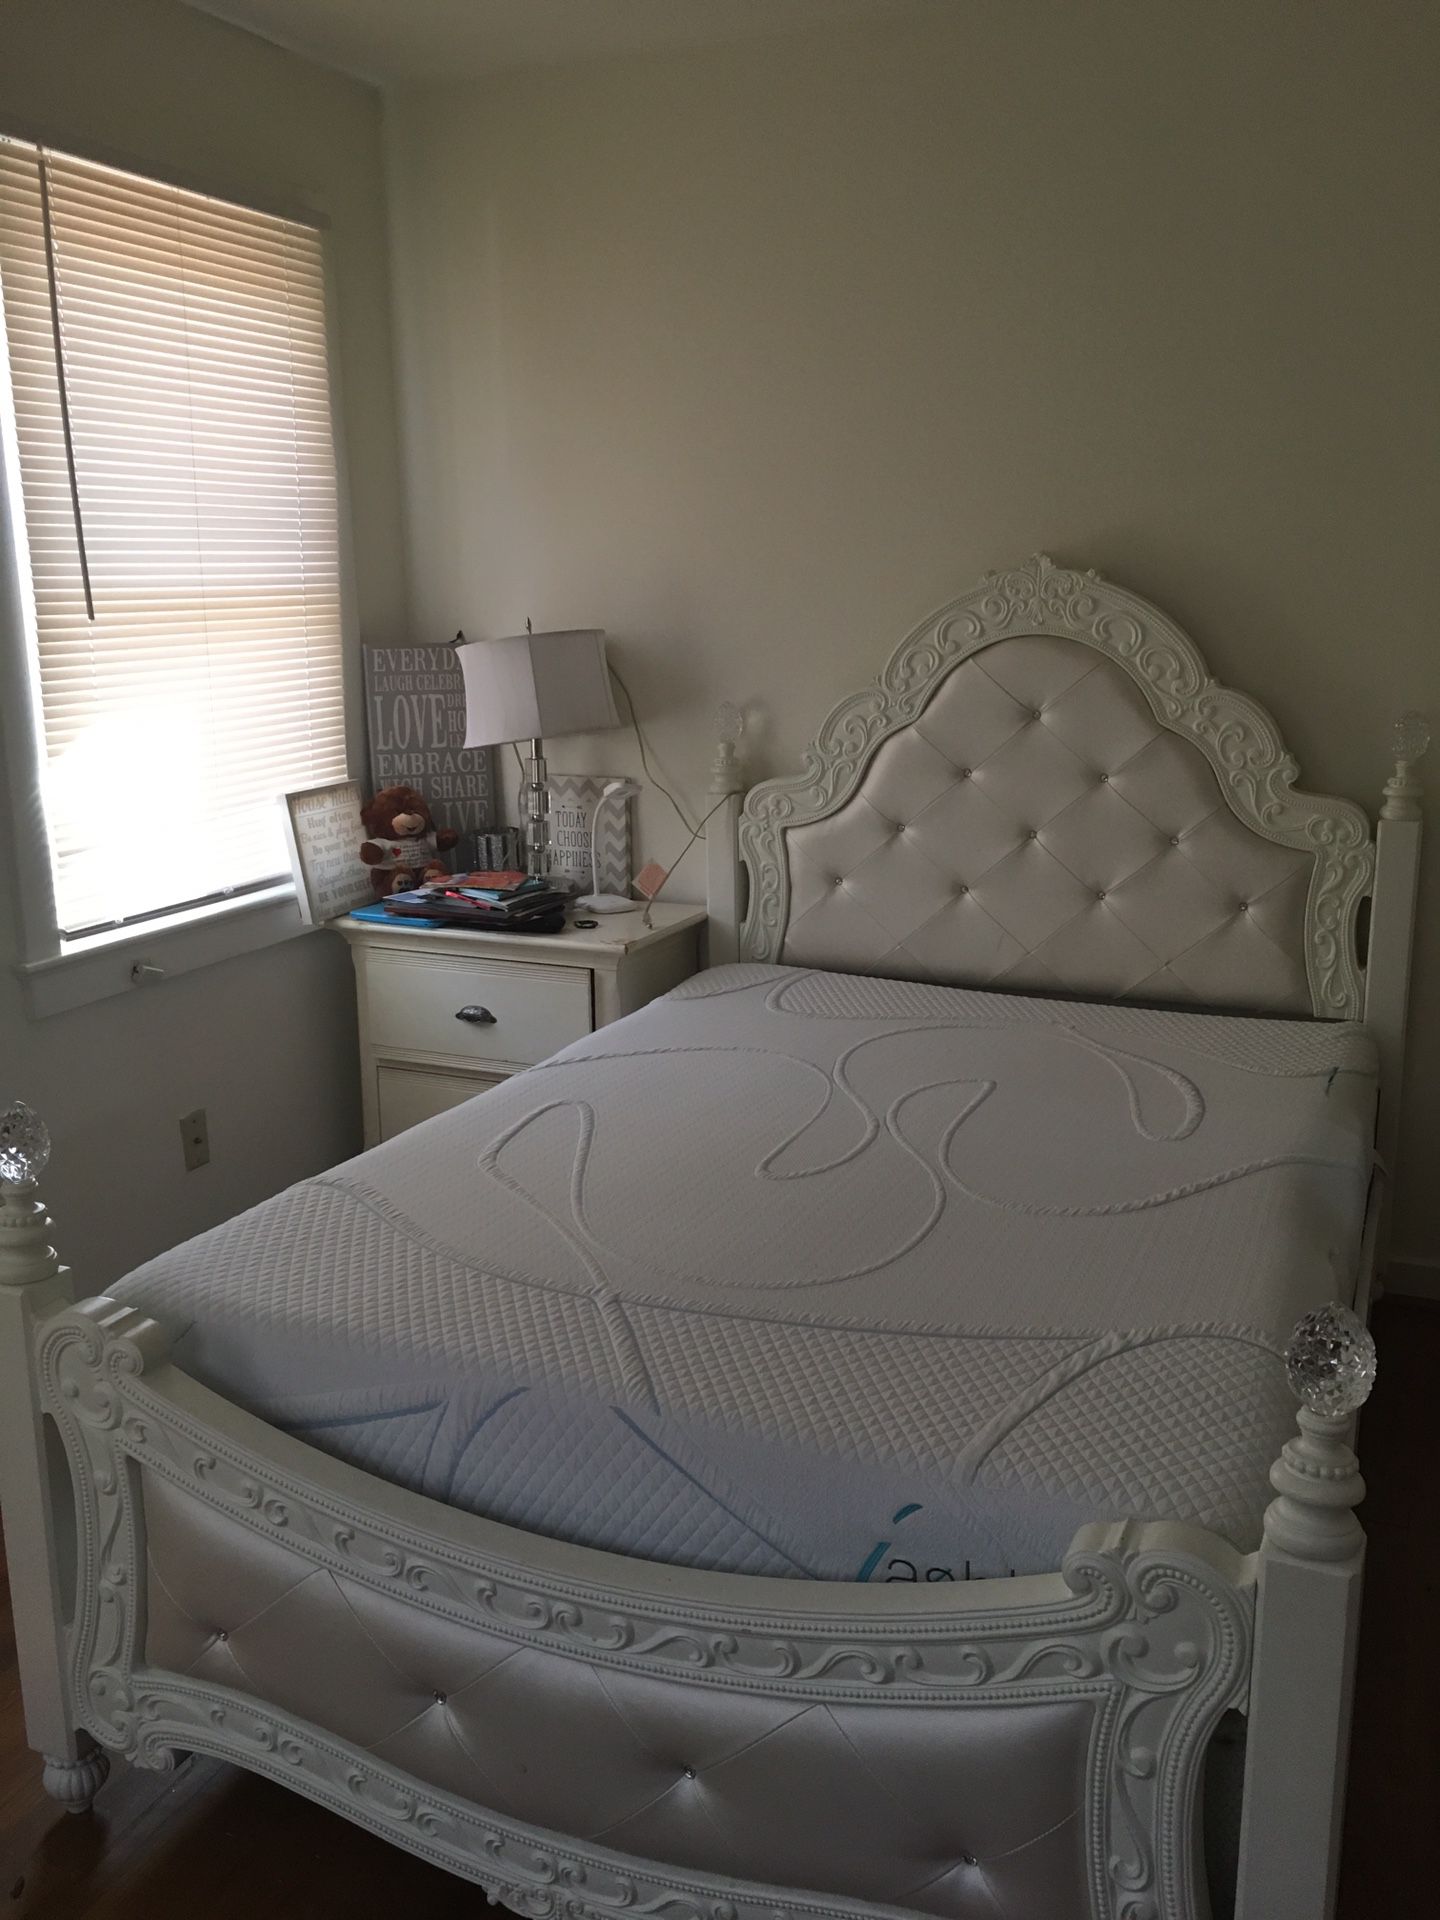 Full poster bed frame. Ashley’s furniture